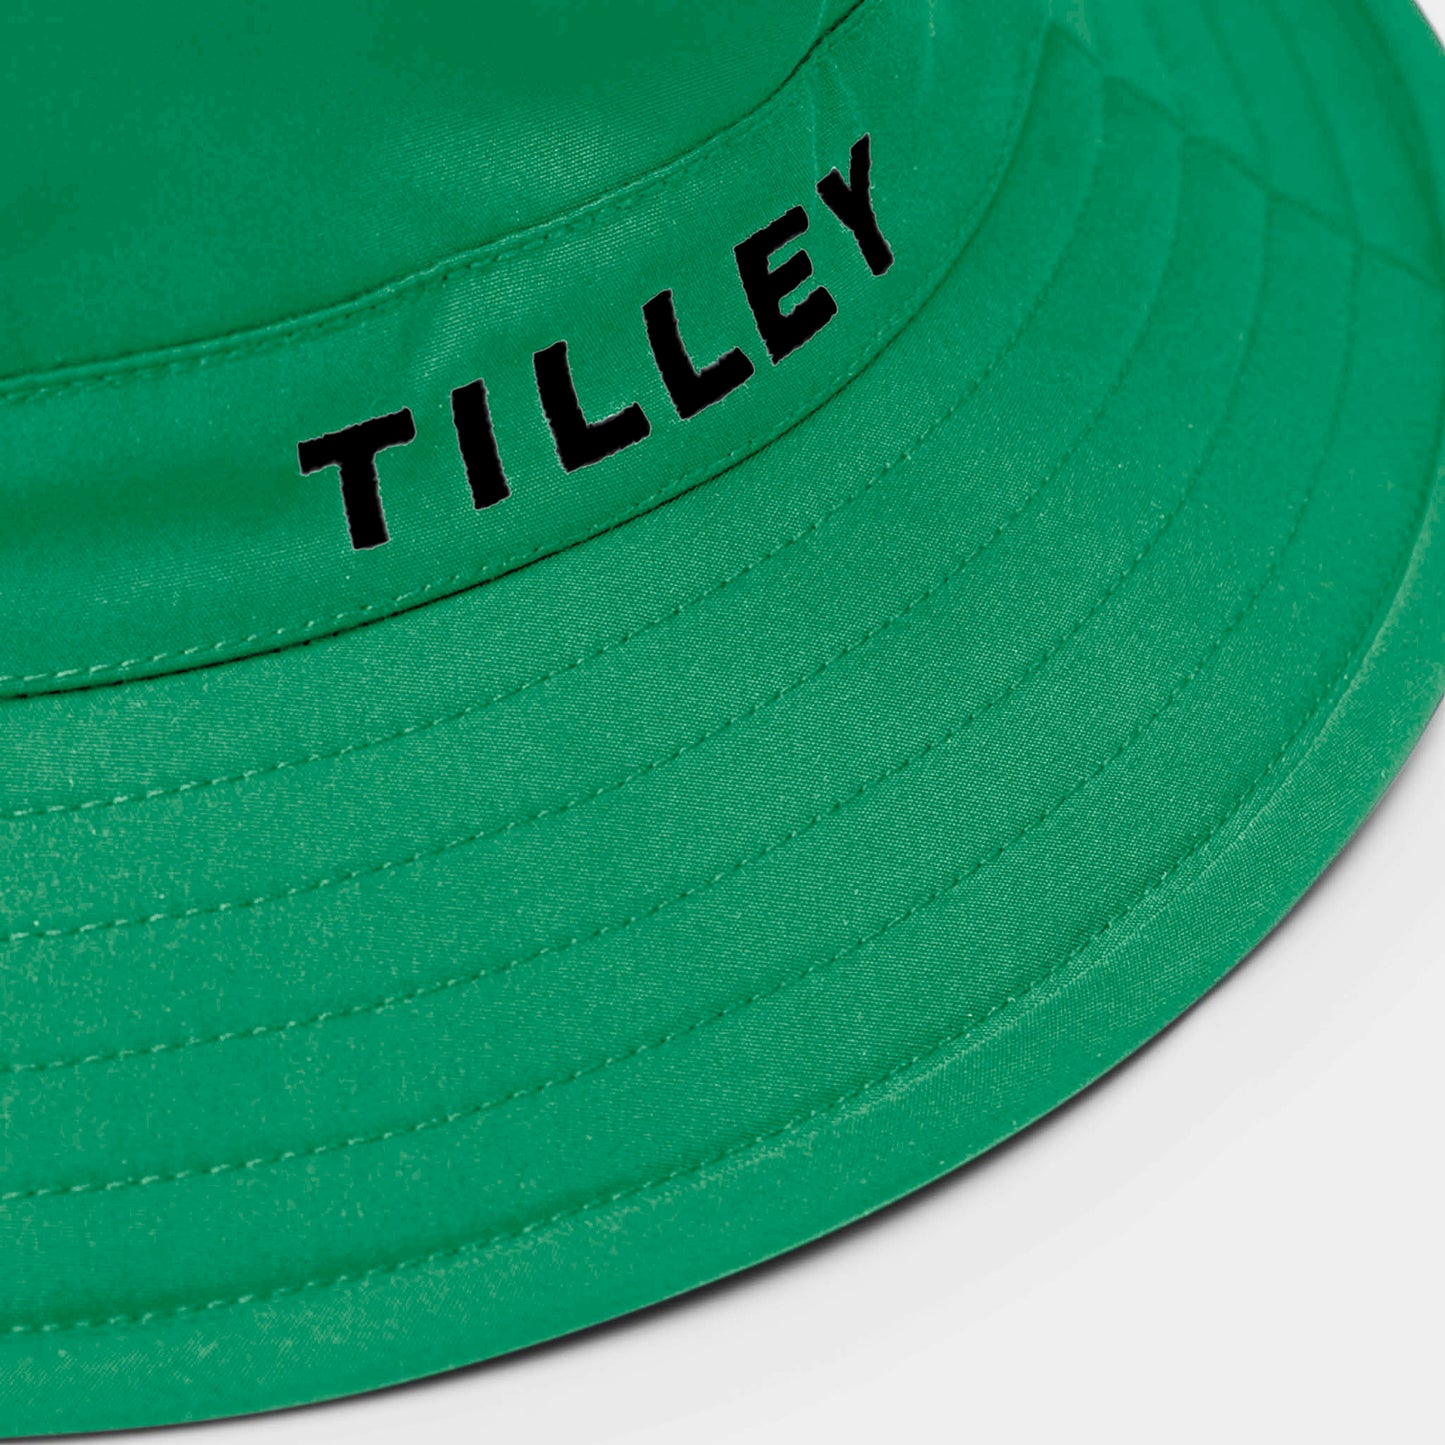 Golf Bucket Hat - Green